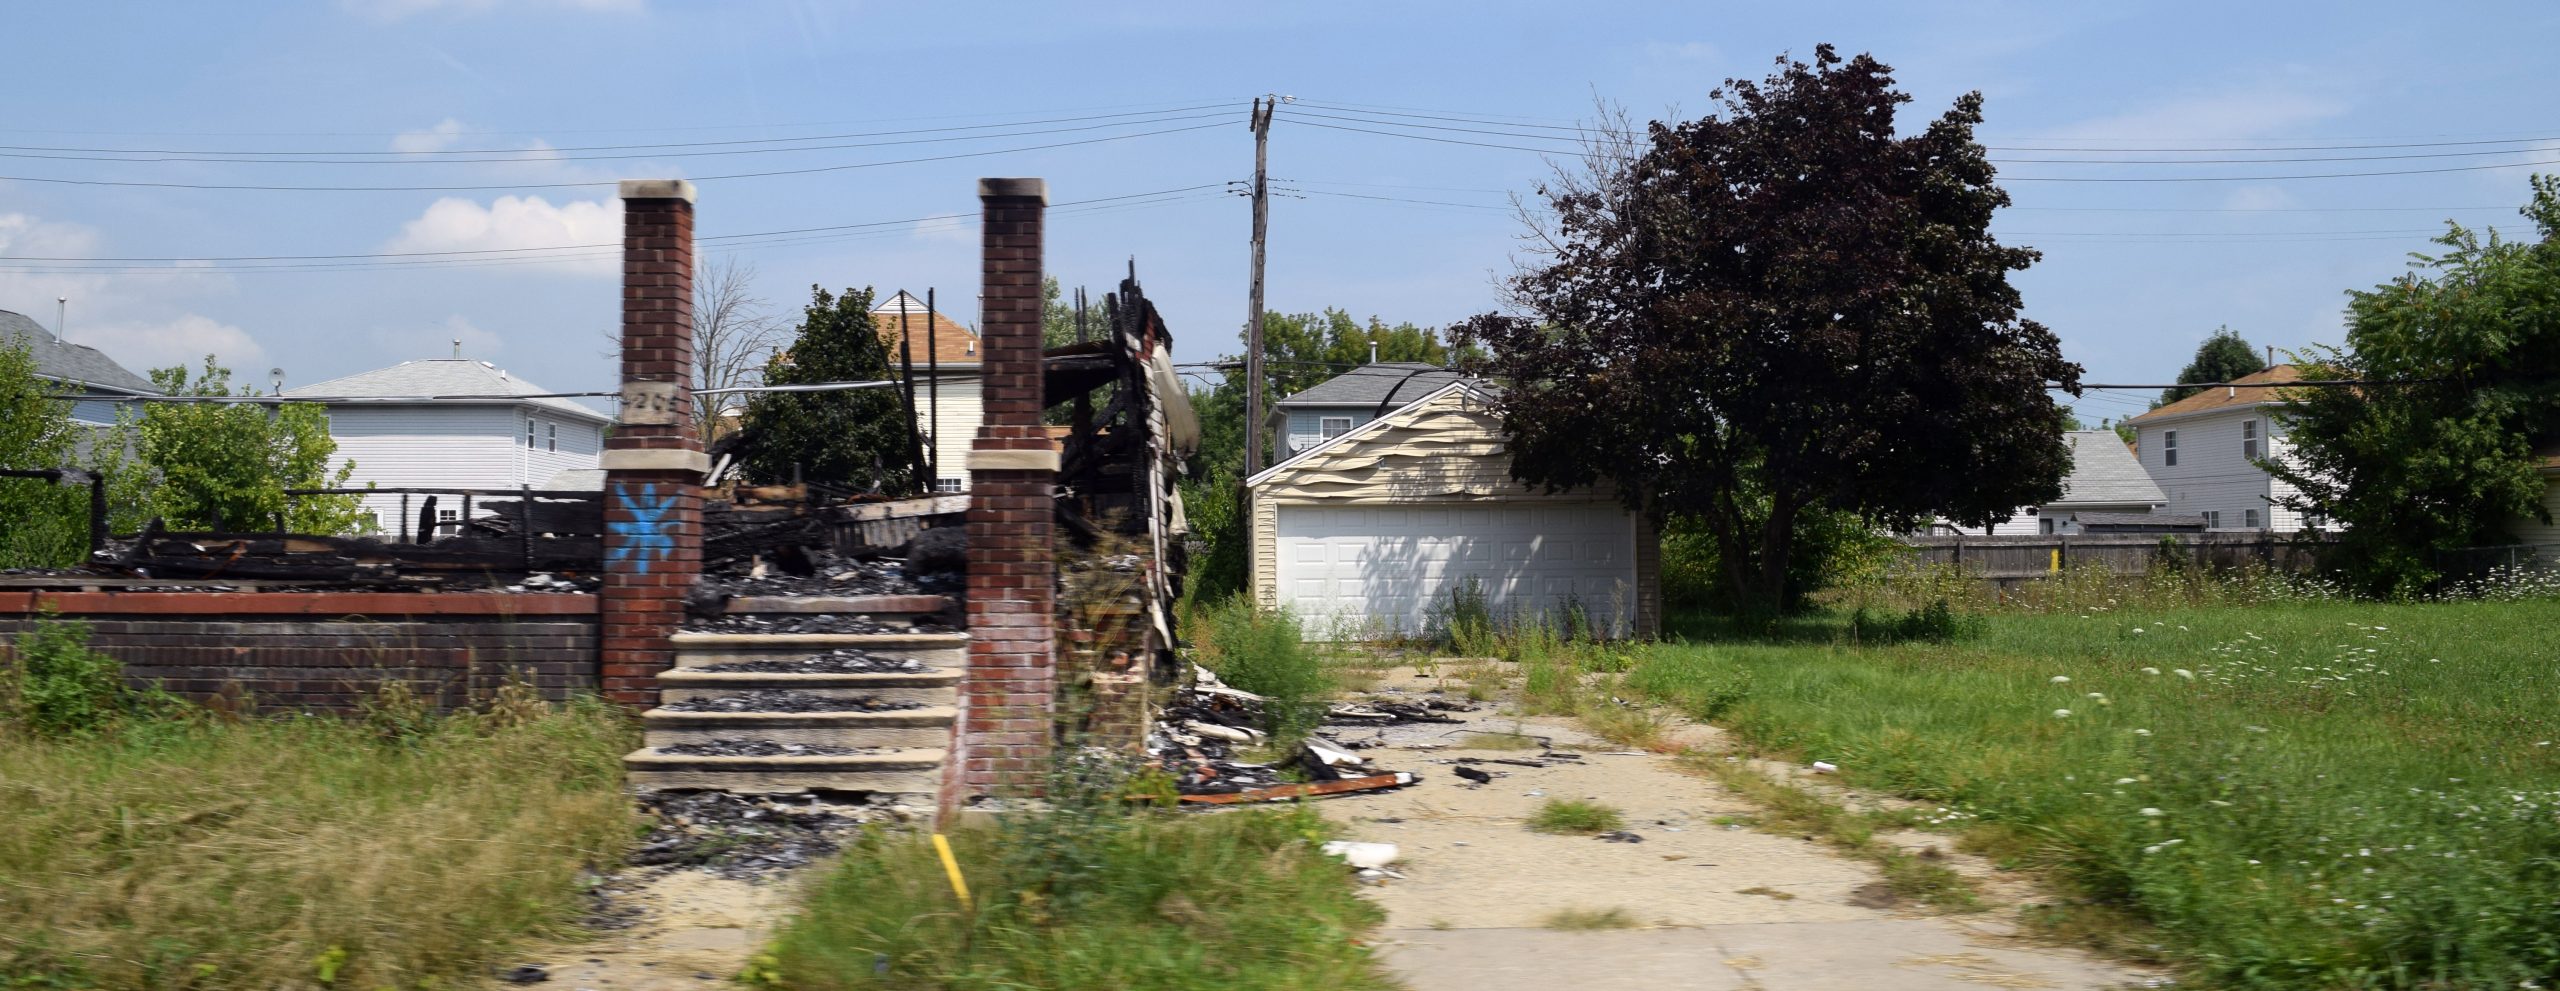 Vacancy and Abandonment in Detroit (Credit: Luke Telander for Community Progress, 2015)